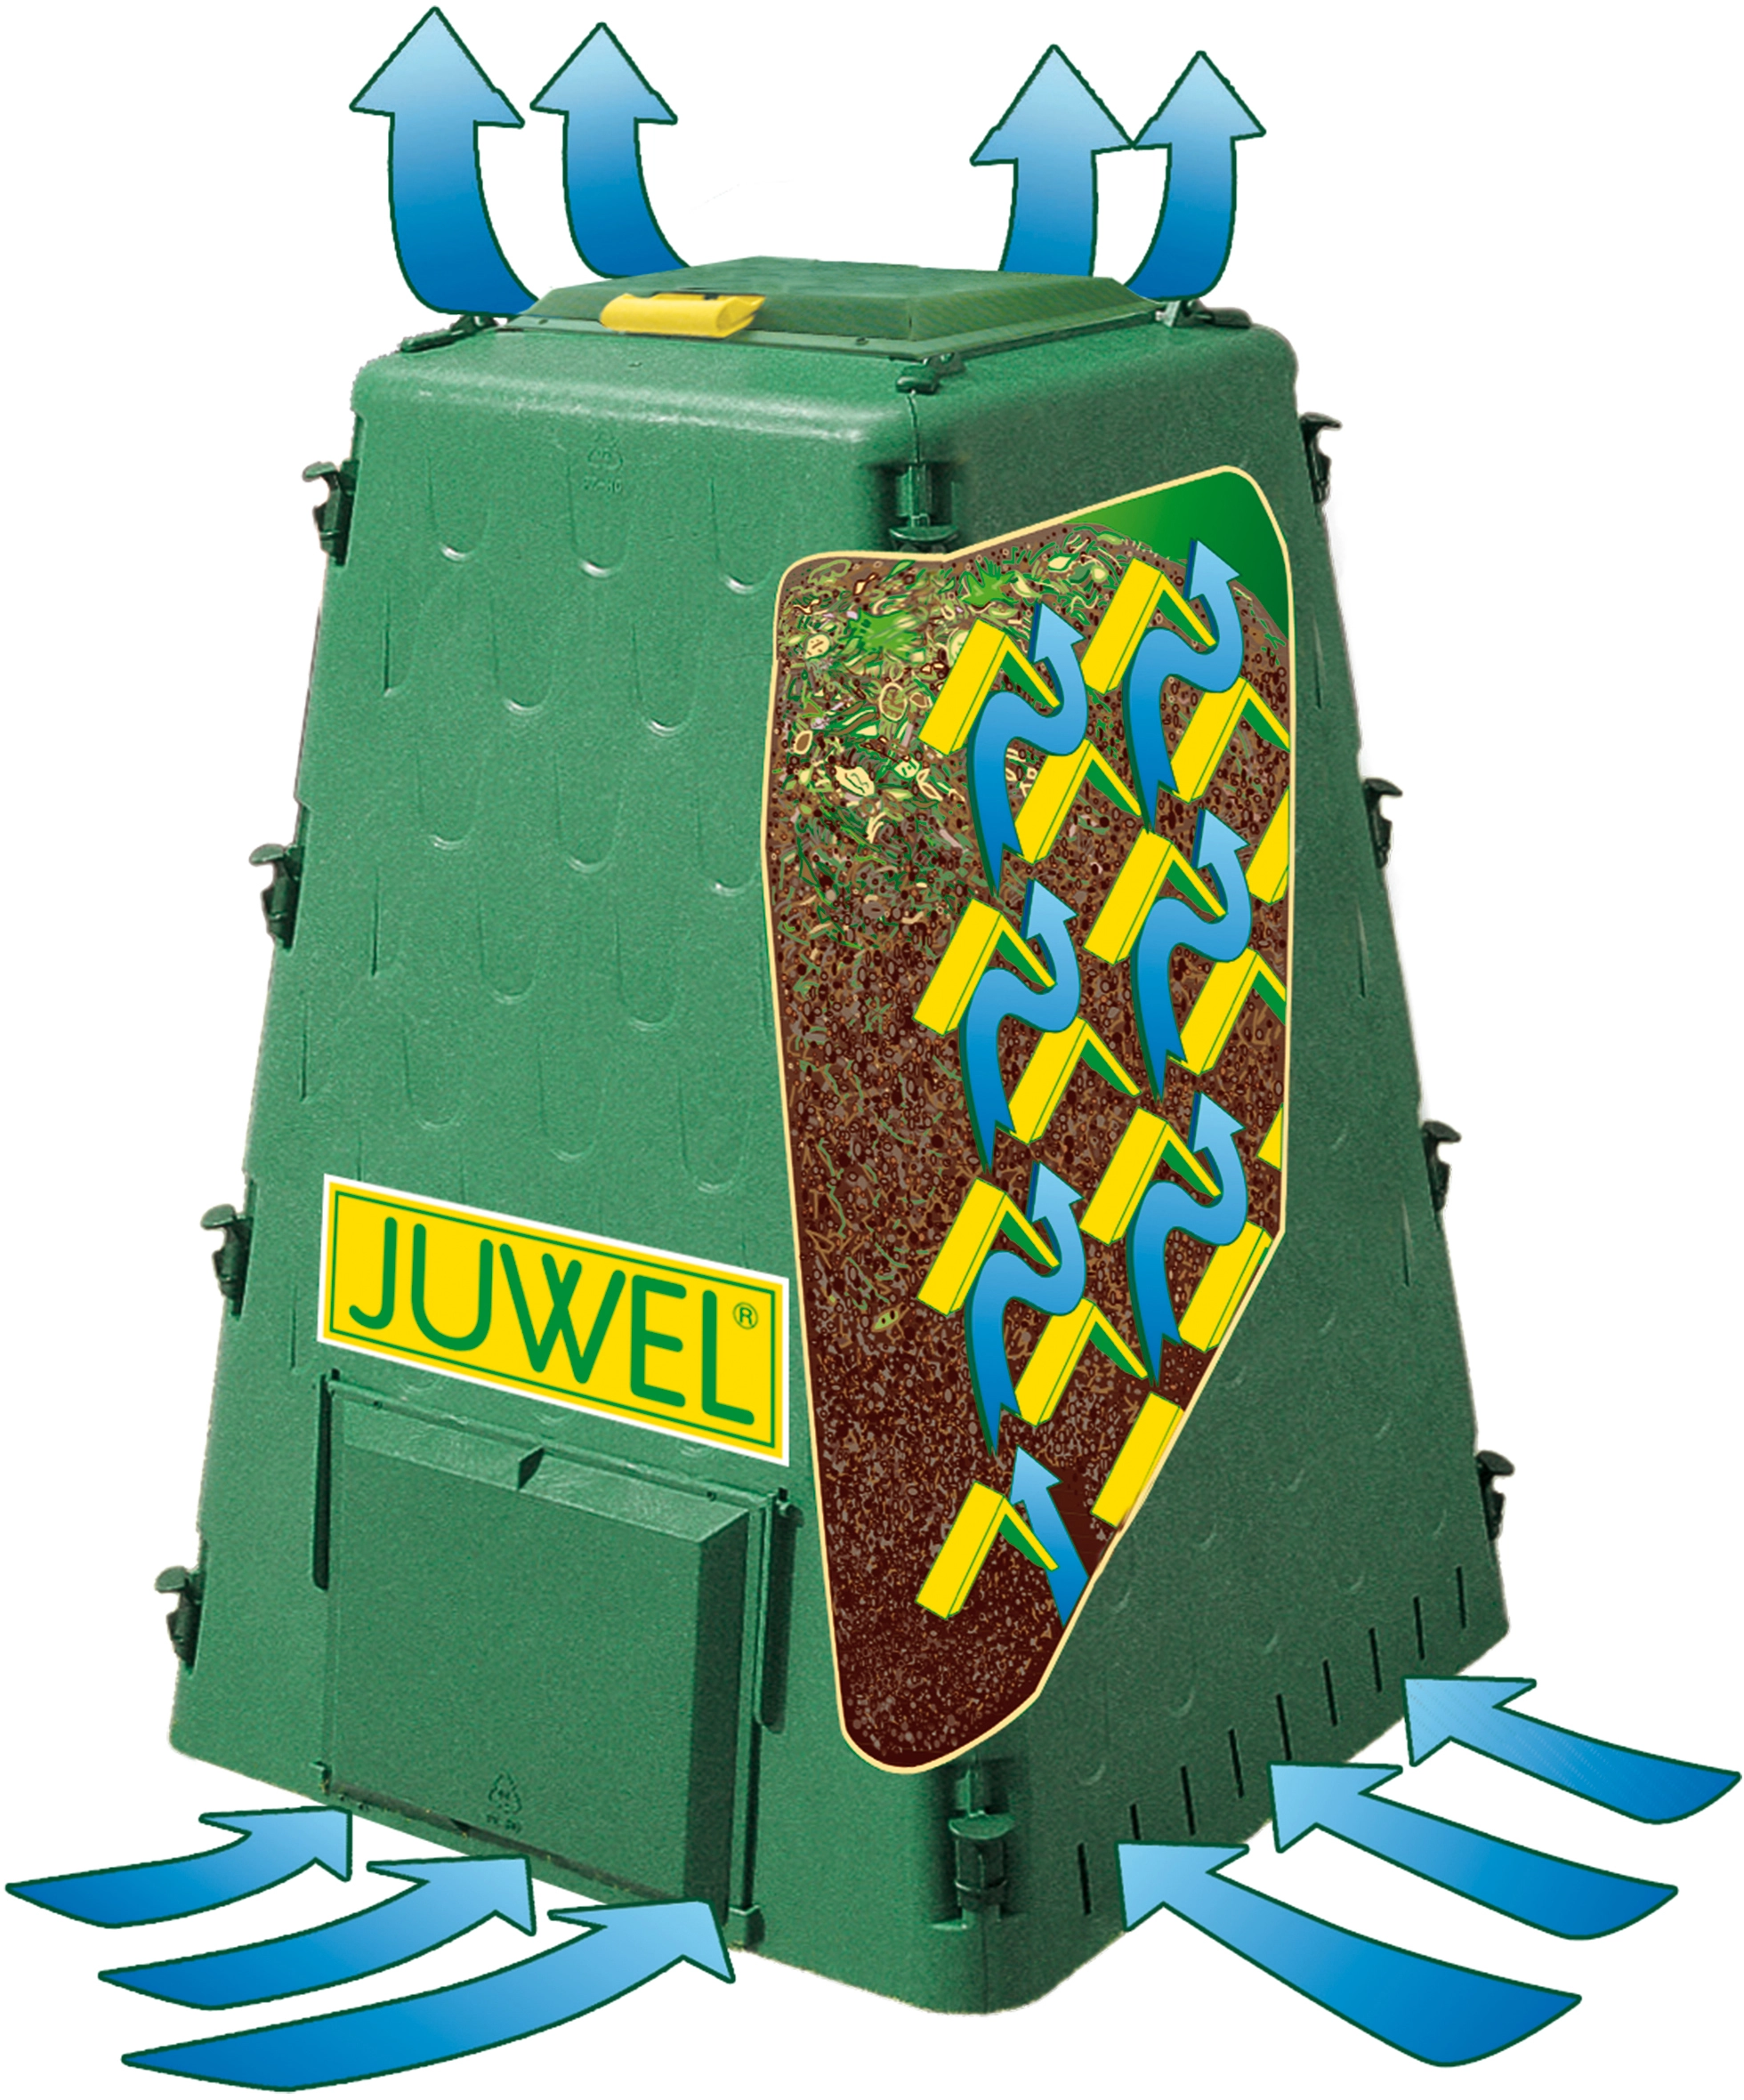 OBI Juwel Thermokomposter 420 kaufen bei l Aeroquick